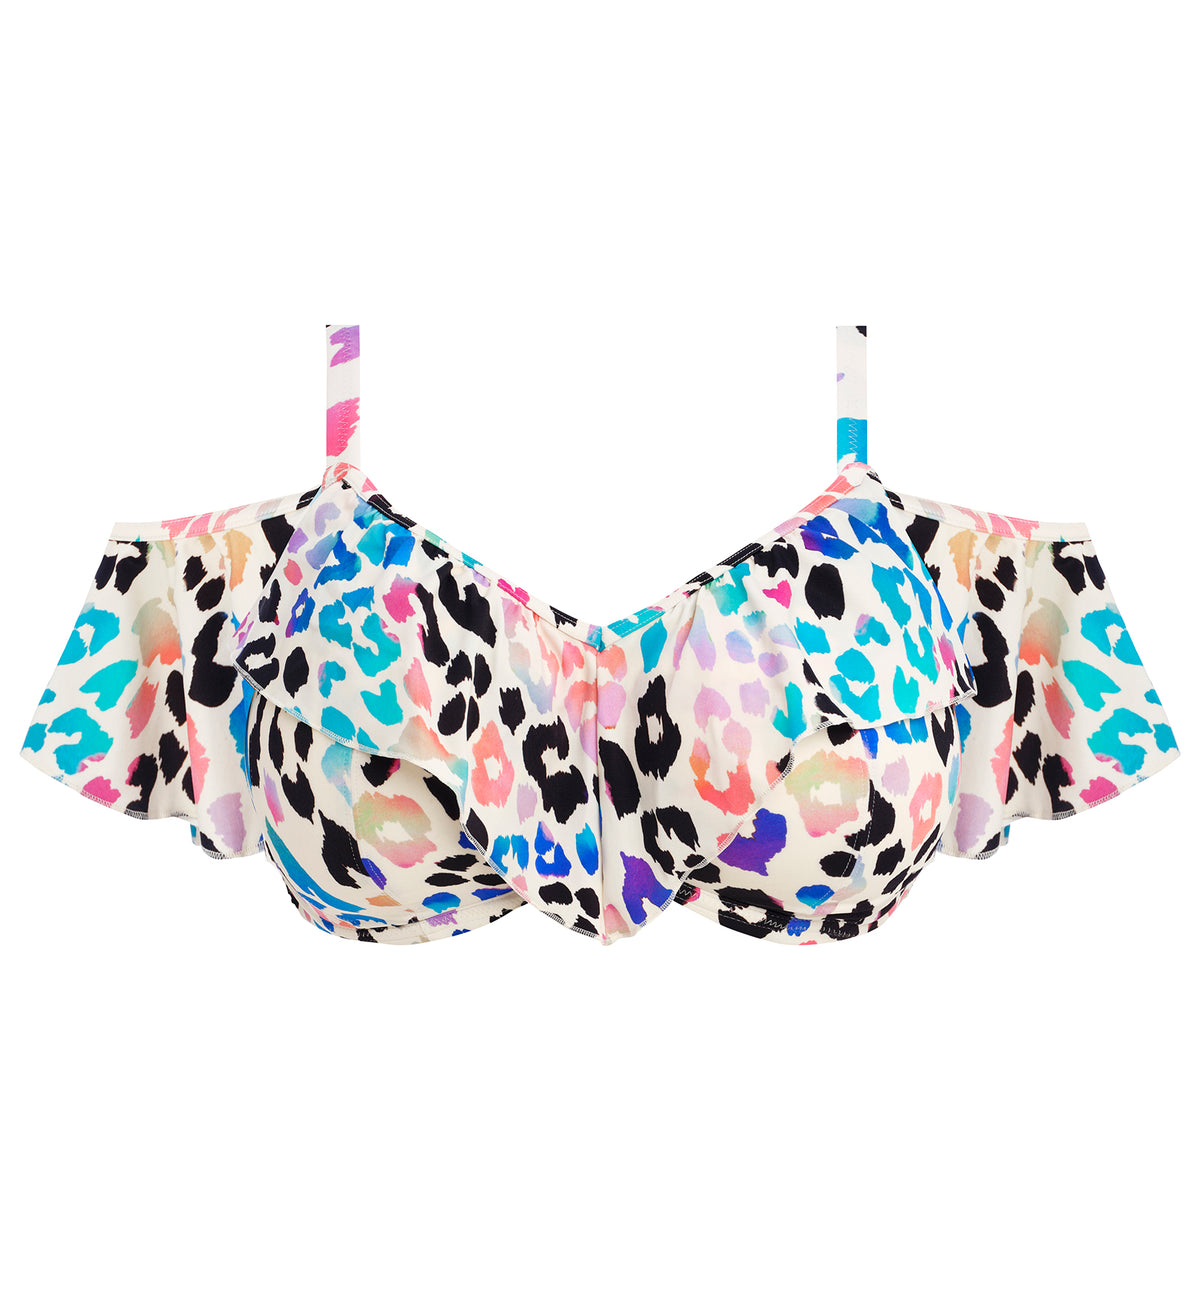 Elomi Party Bay Bardot Ruffle Underwire Bikini Top (ES801406),34G,Multi - Multi,34G